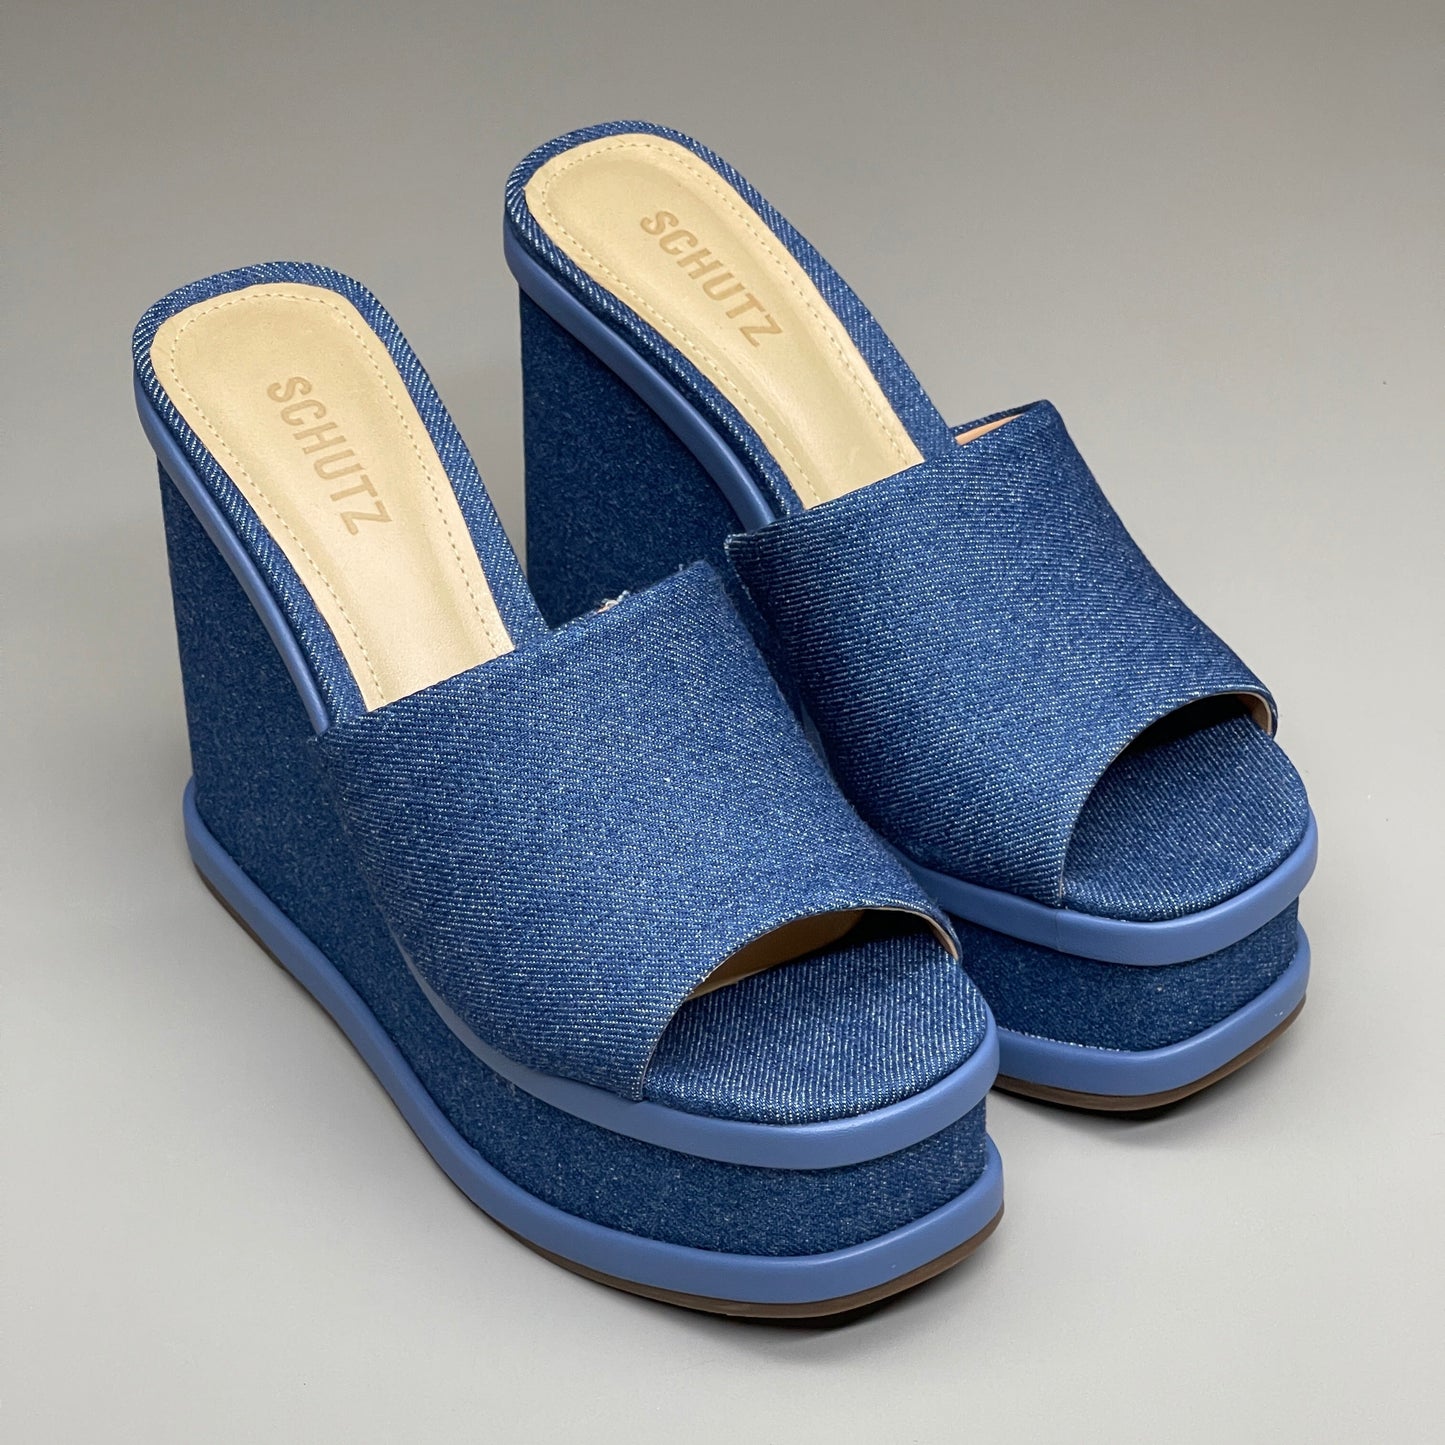 SCHUTZ Dalle Denim Women's Wedge Sandal Blue Platform Shoe Sz 10B (New)